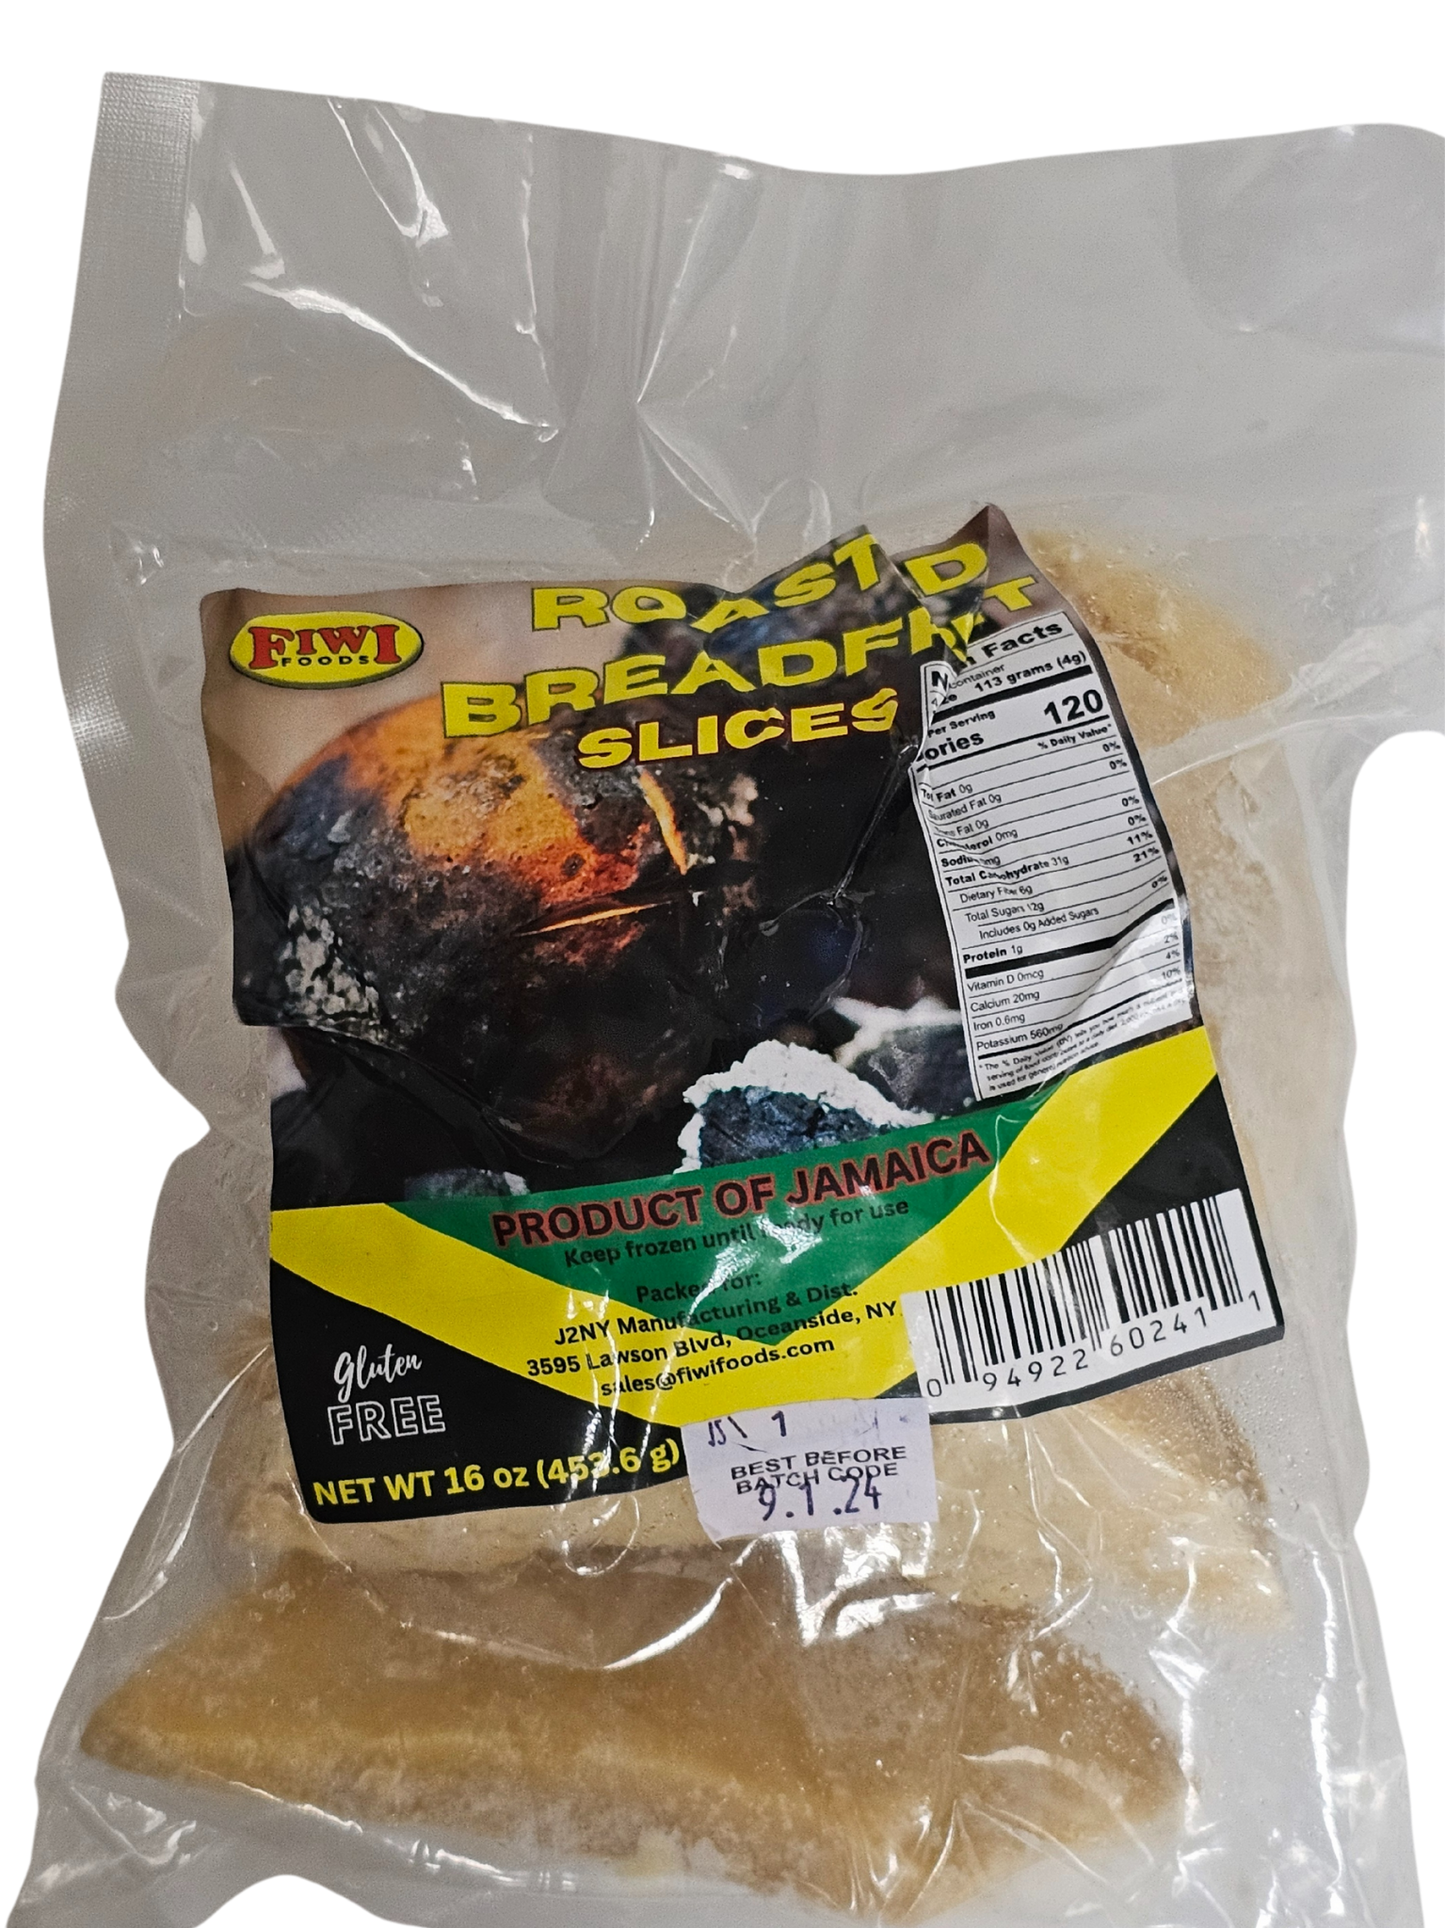 Roasted Breadfruit Slices